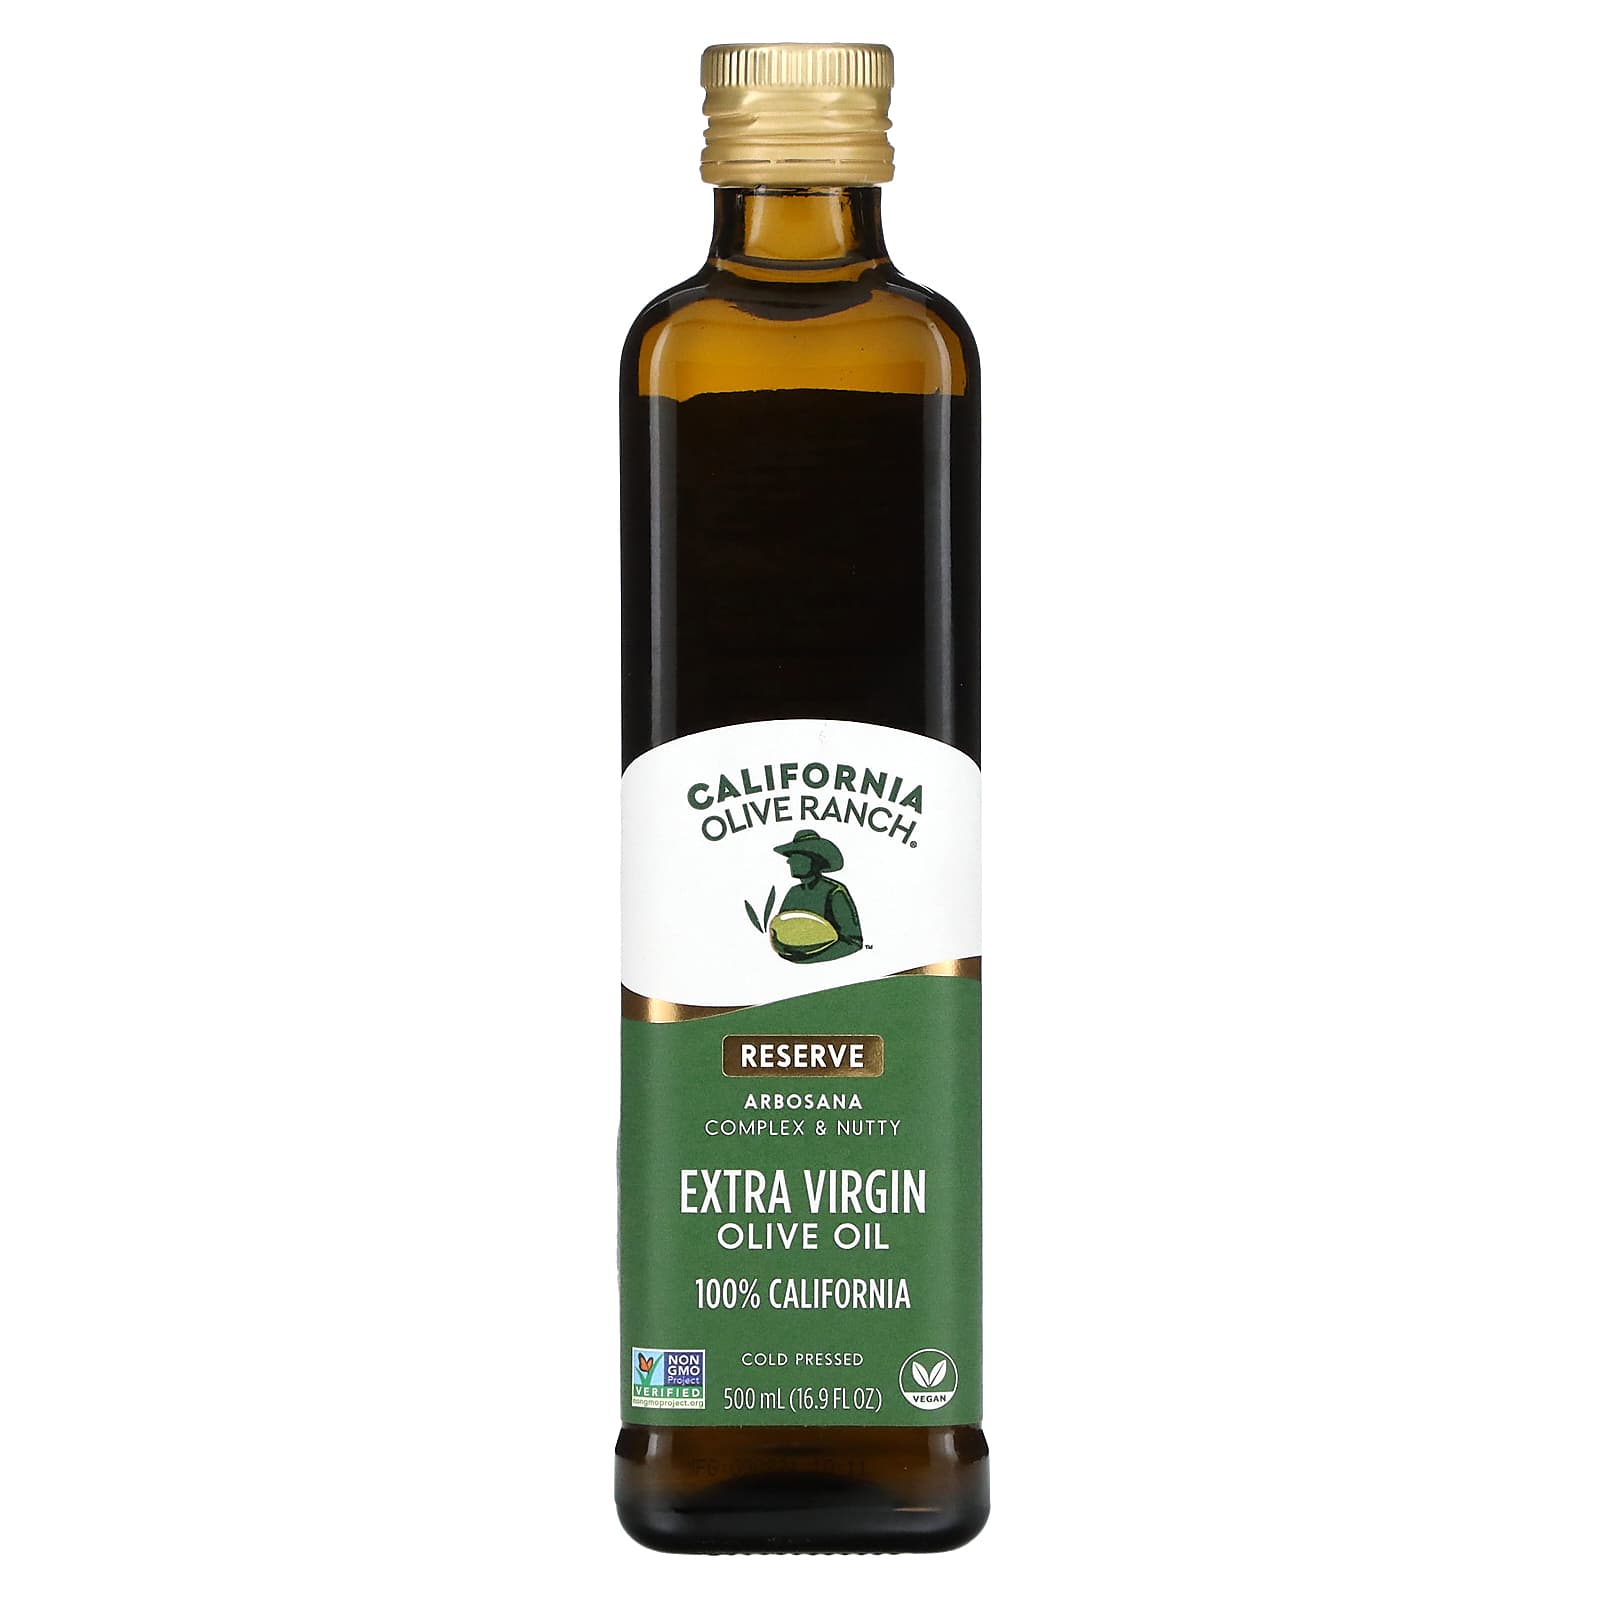 Aceite de oliva extra virgen San Lucas 4 L — Click Abasto